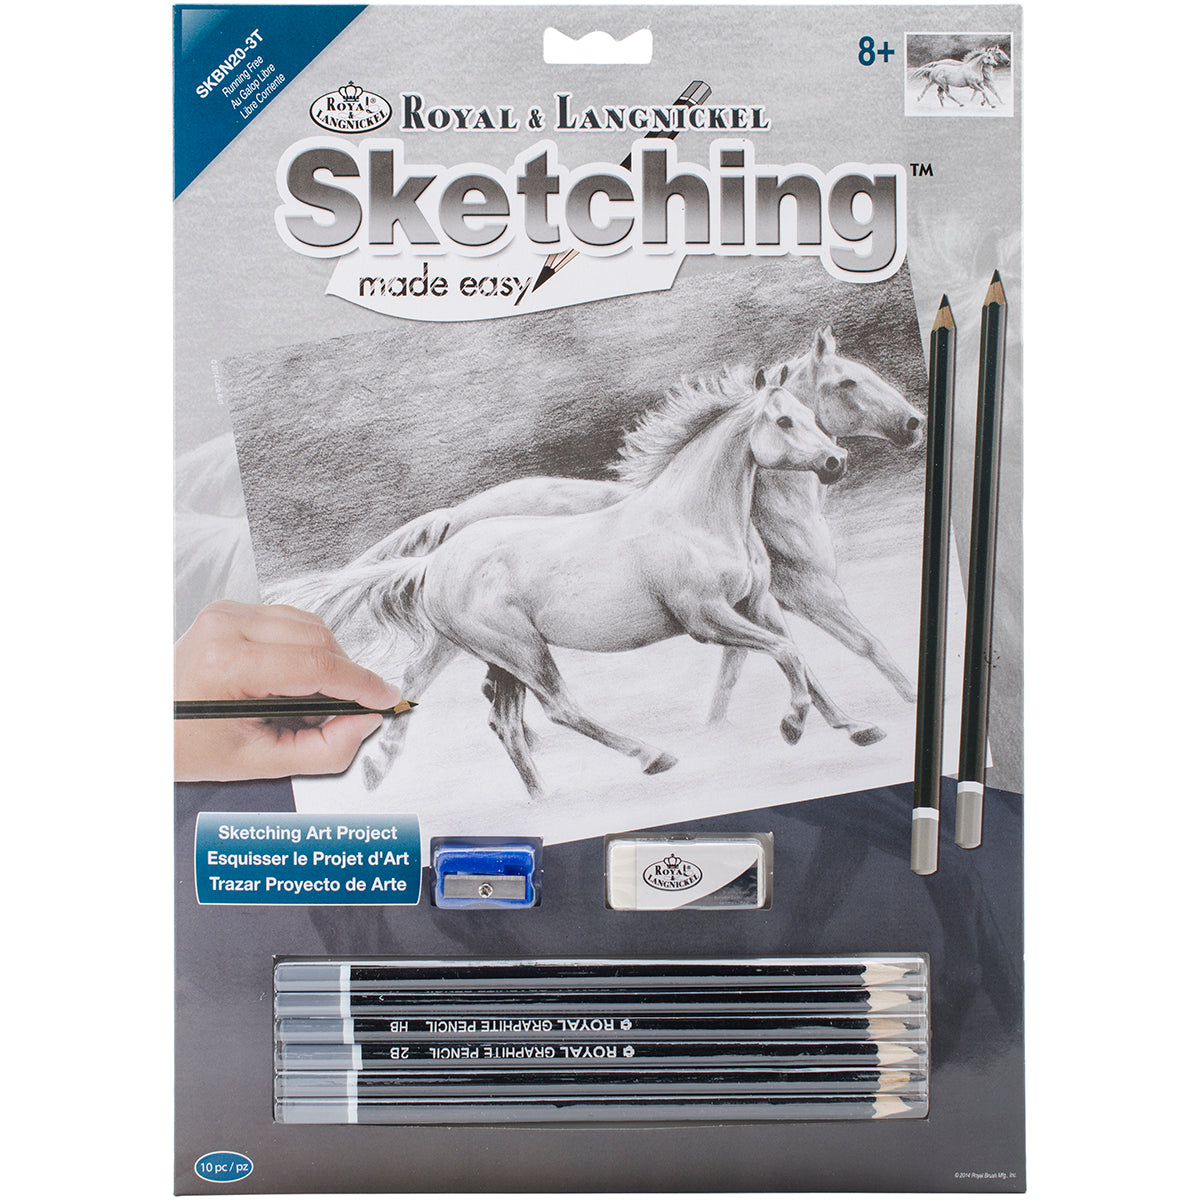 Royal & Langnickel Sketching Made Easy Kit 9x12"